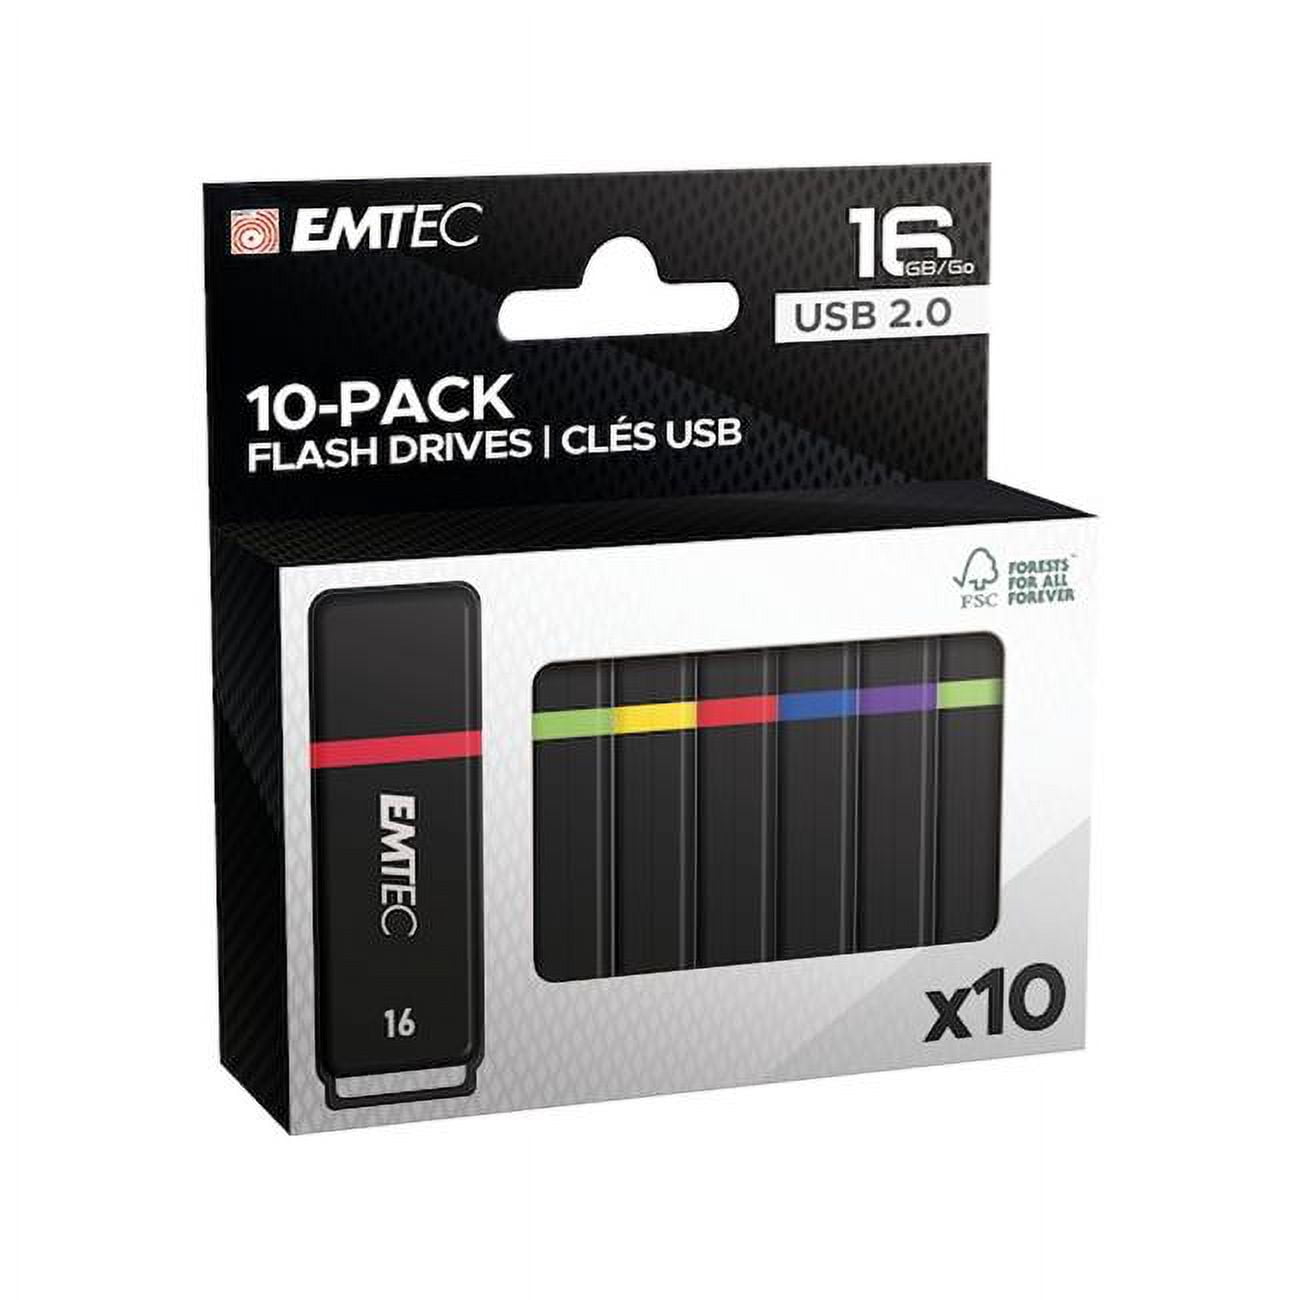 Picture of Emtec ECMMD16GK102P10 USB 2.0 16GB K100 Flash Drive Box - Pack 10